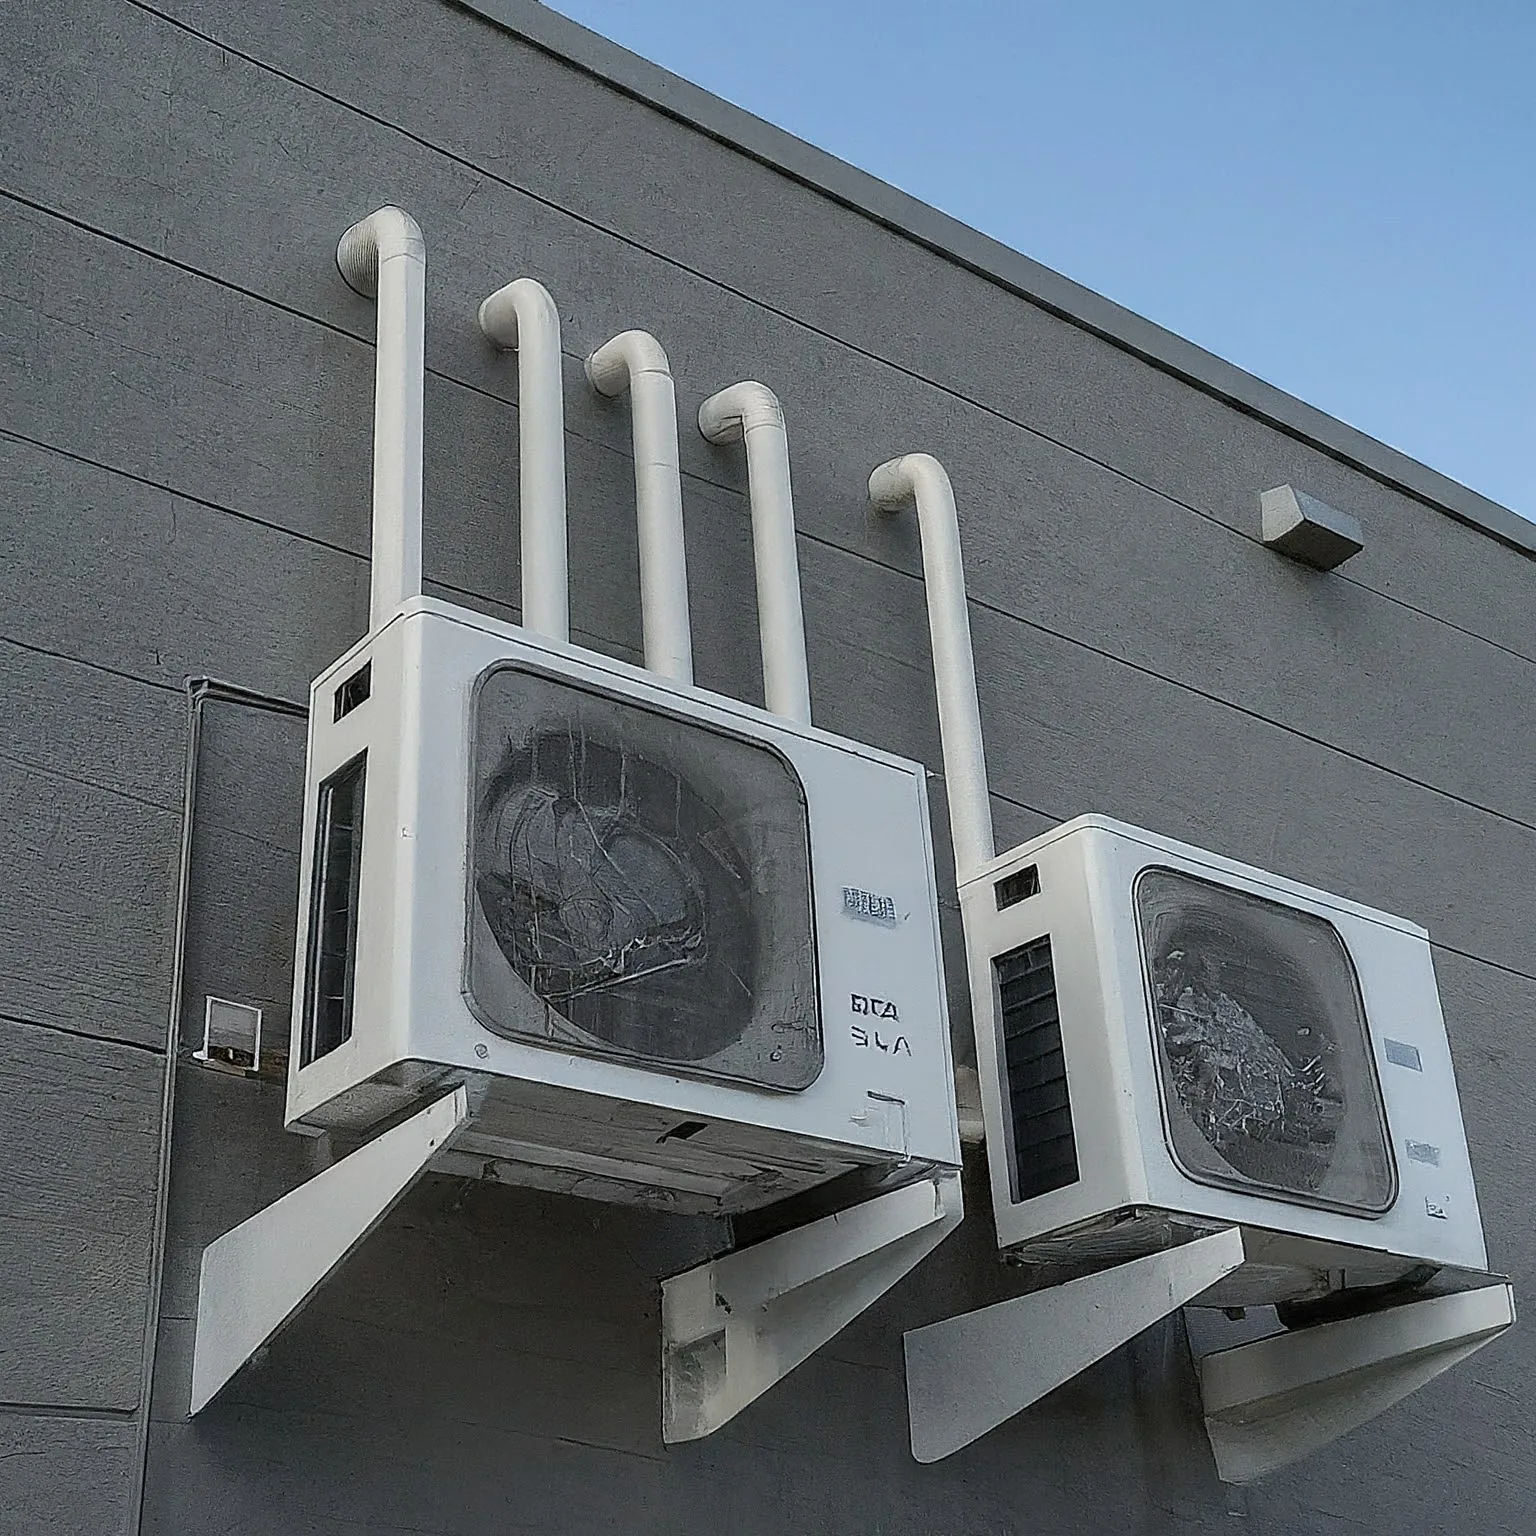 heat pumps on a building